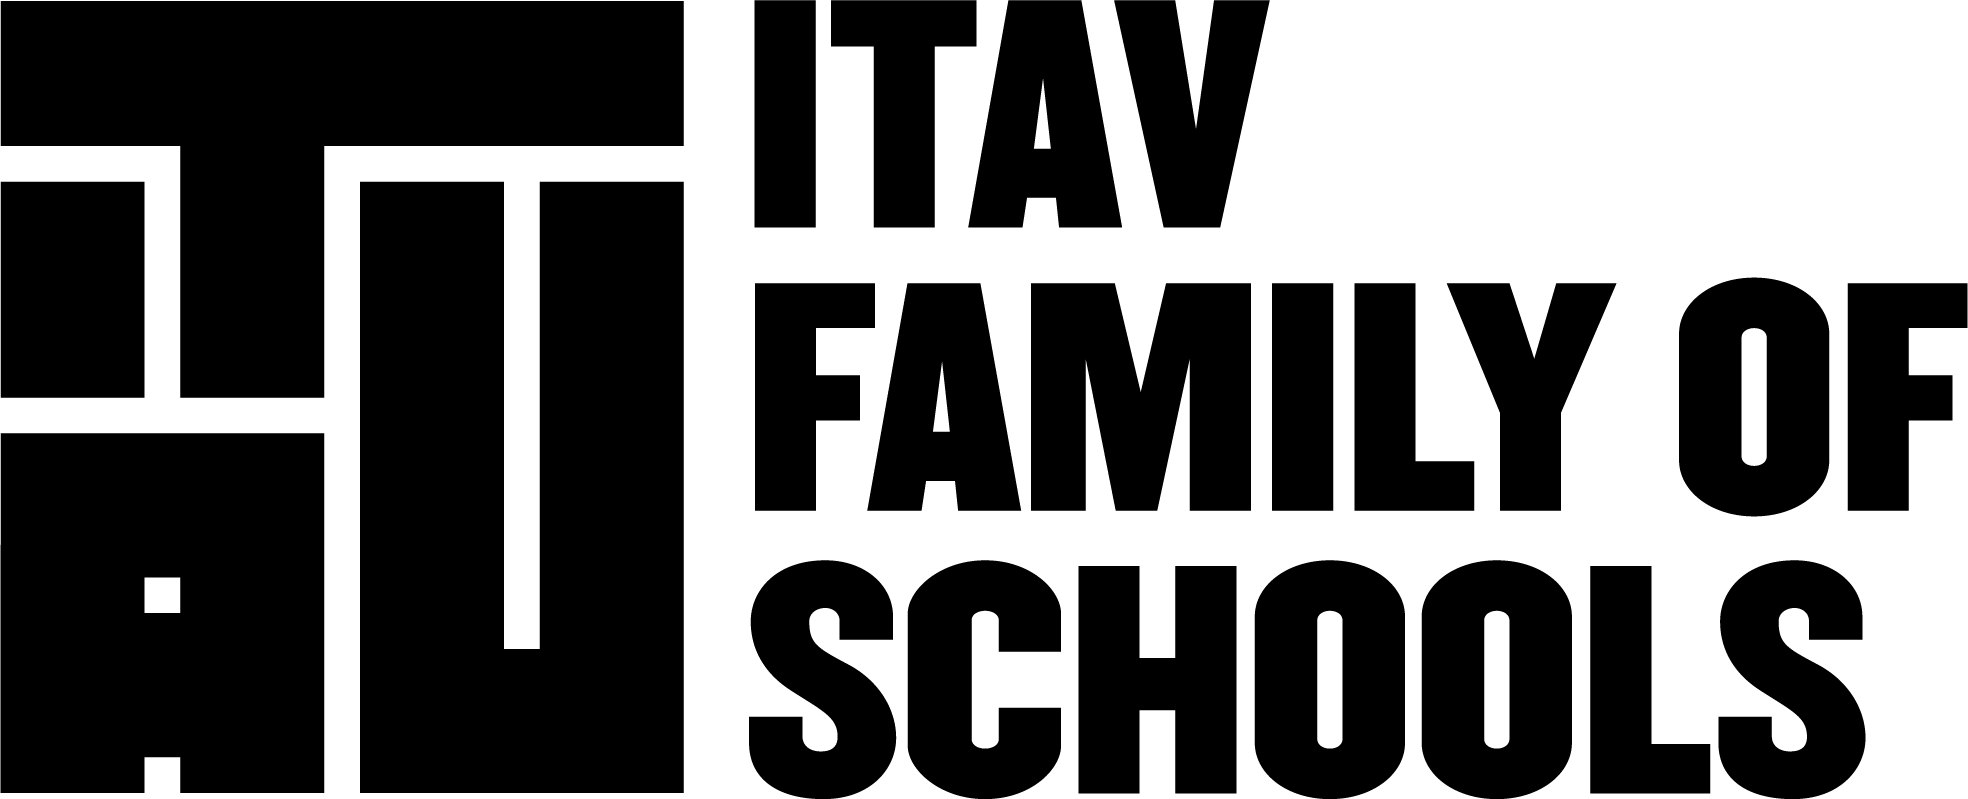 ITAV_Family of Schools_Black_2x